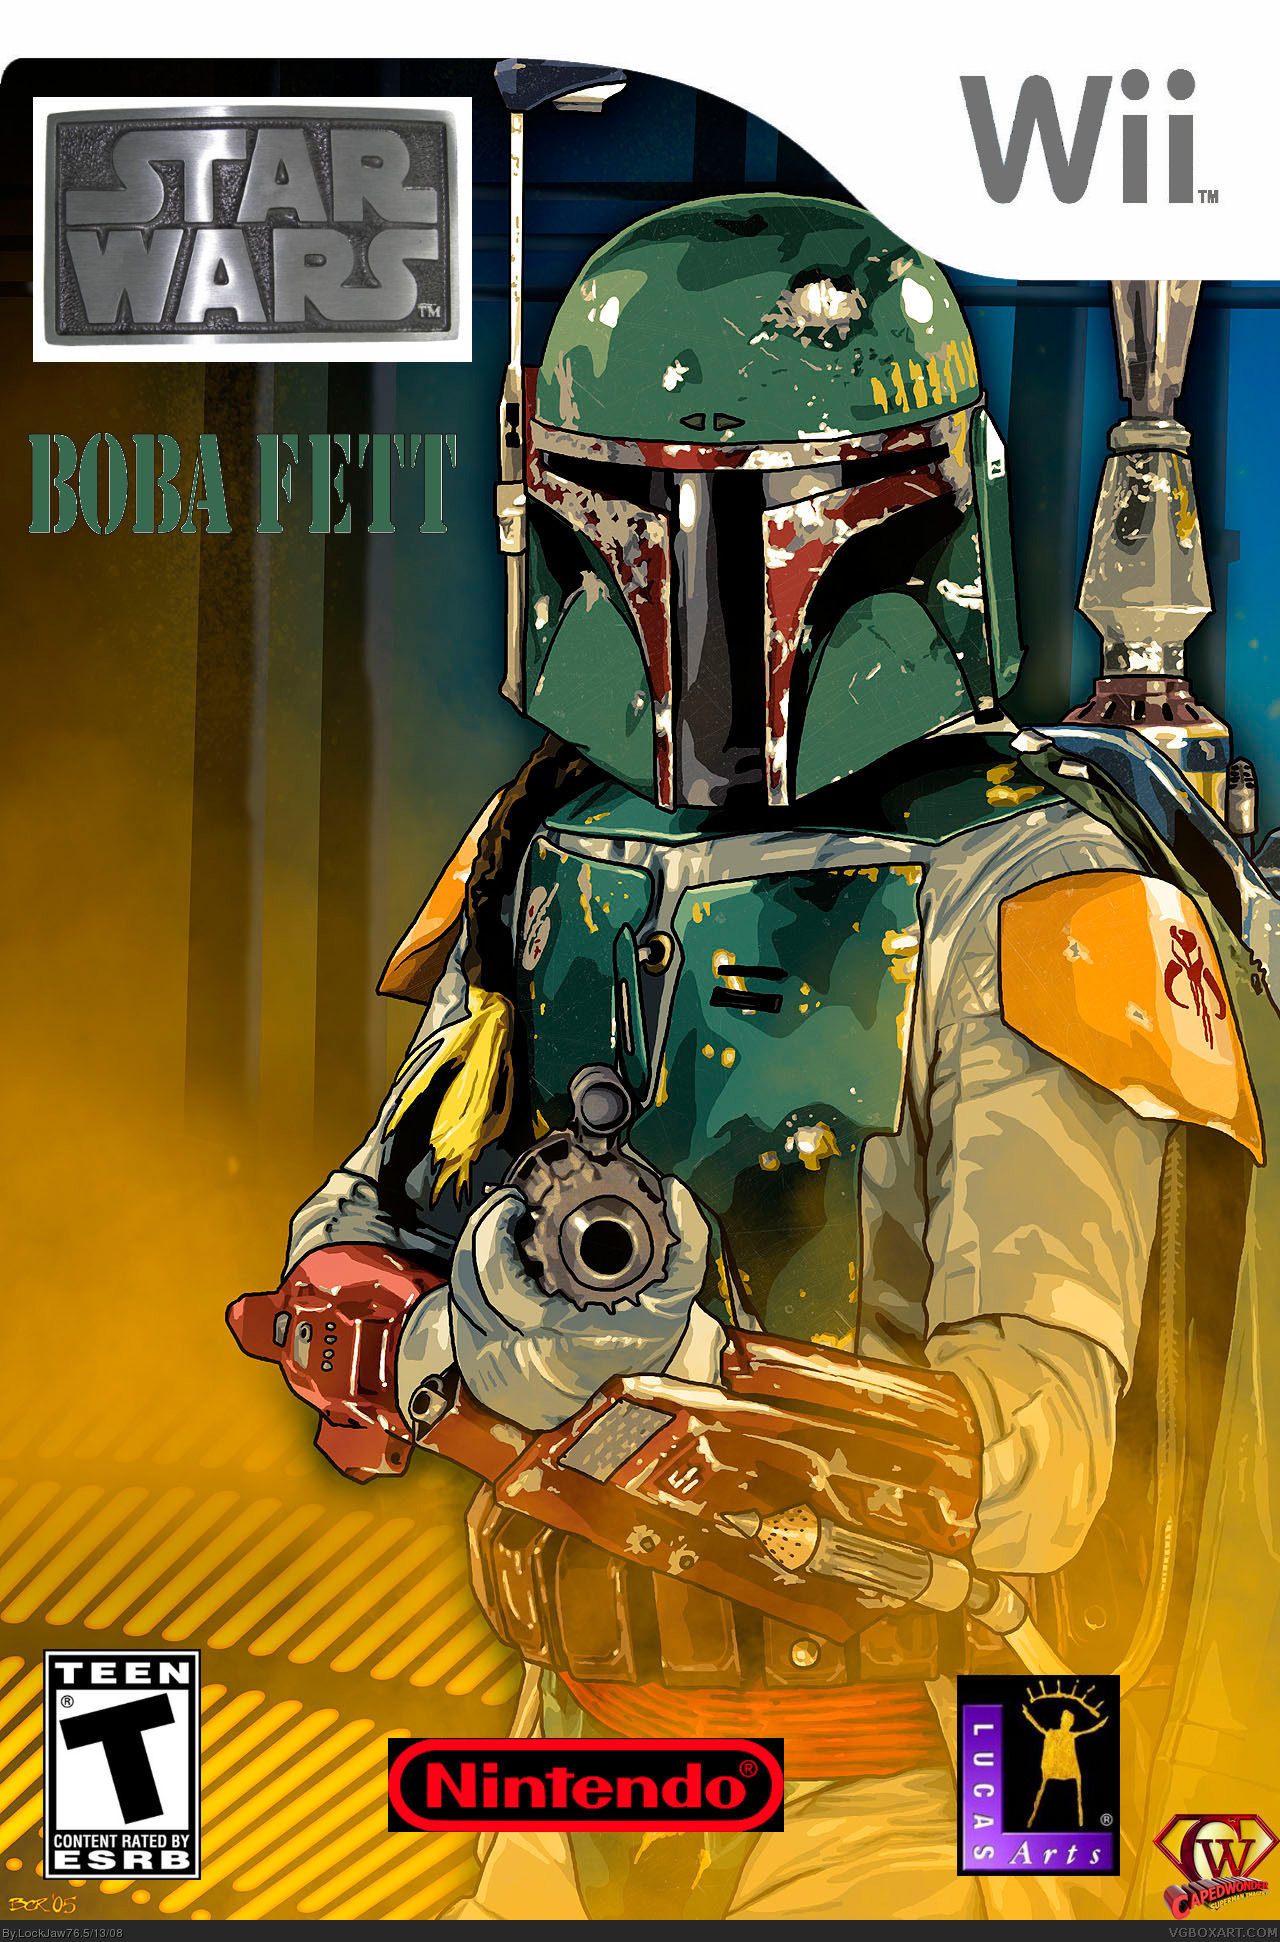 Star Wars: Boba Fett box cover